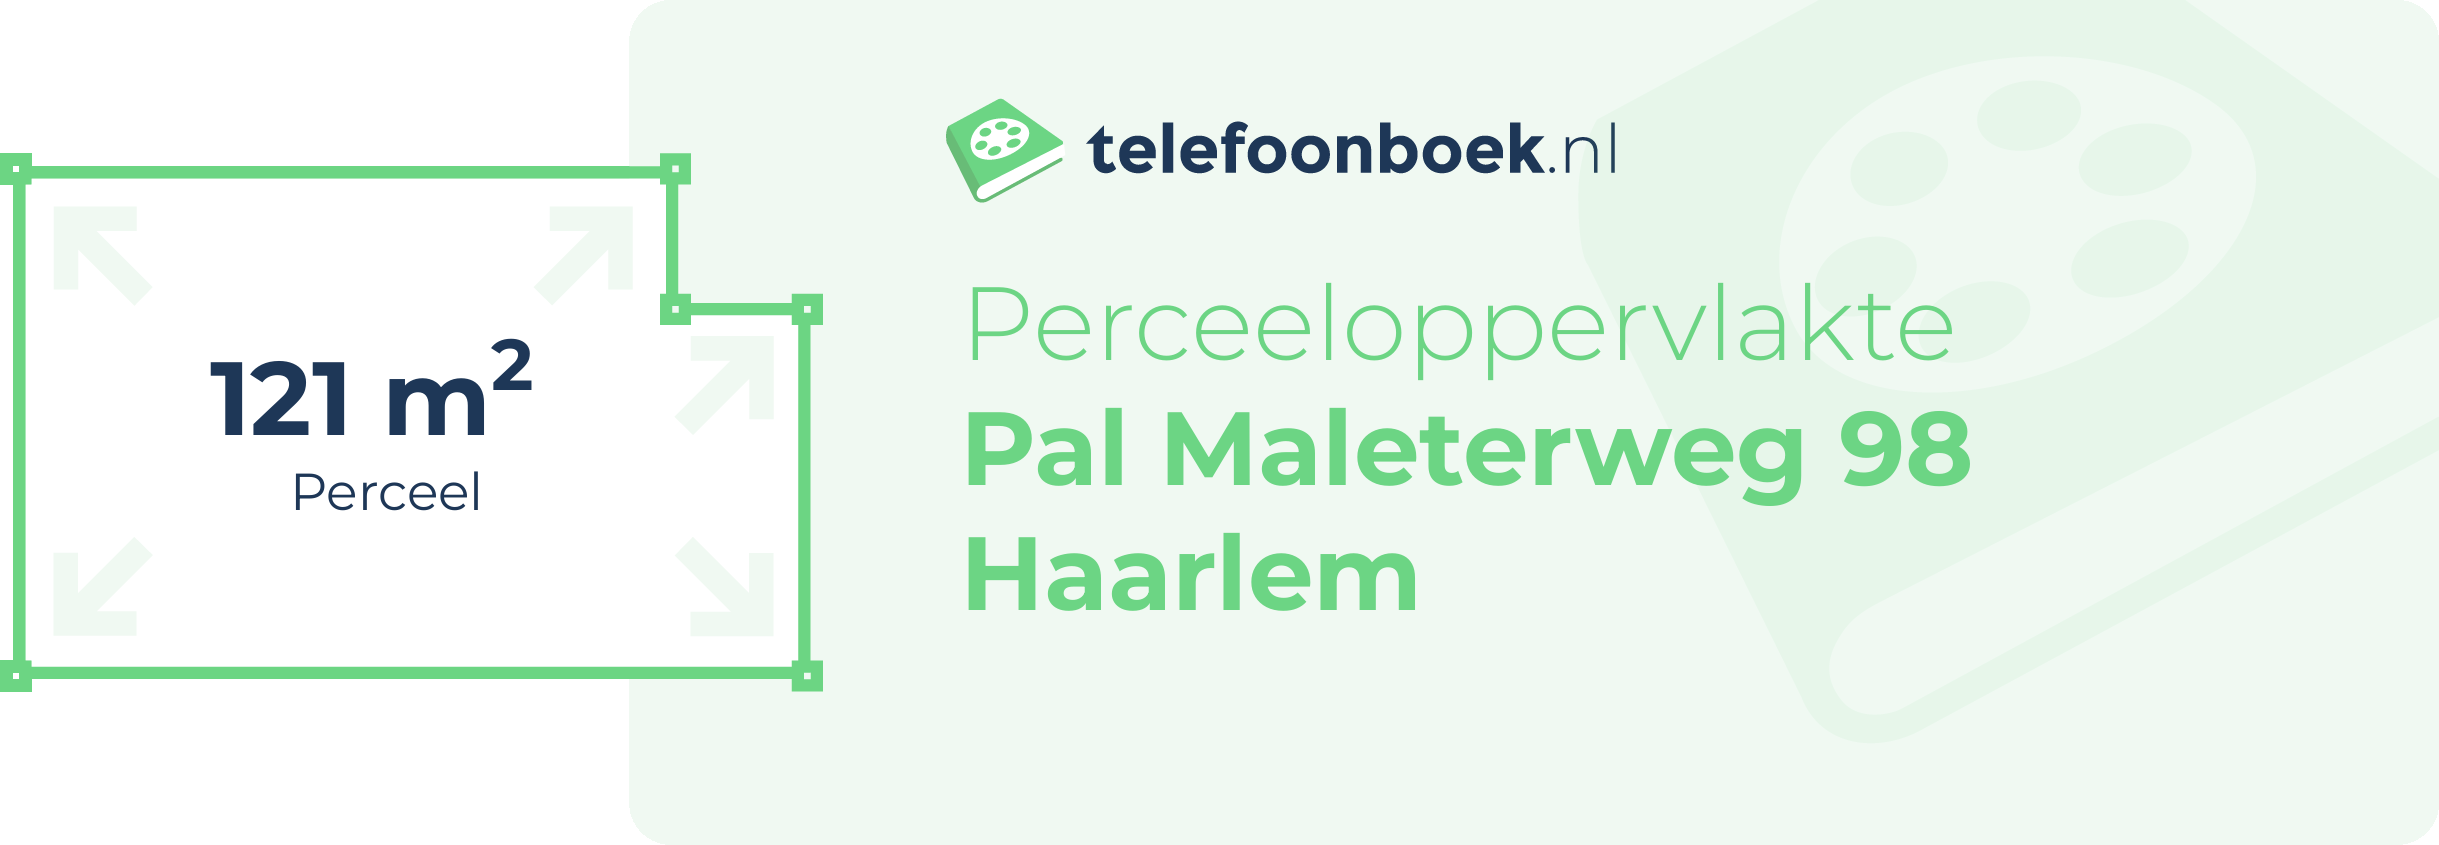 Perceeloppervlakte Pal Maleterweg 98 Haarlem